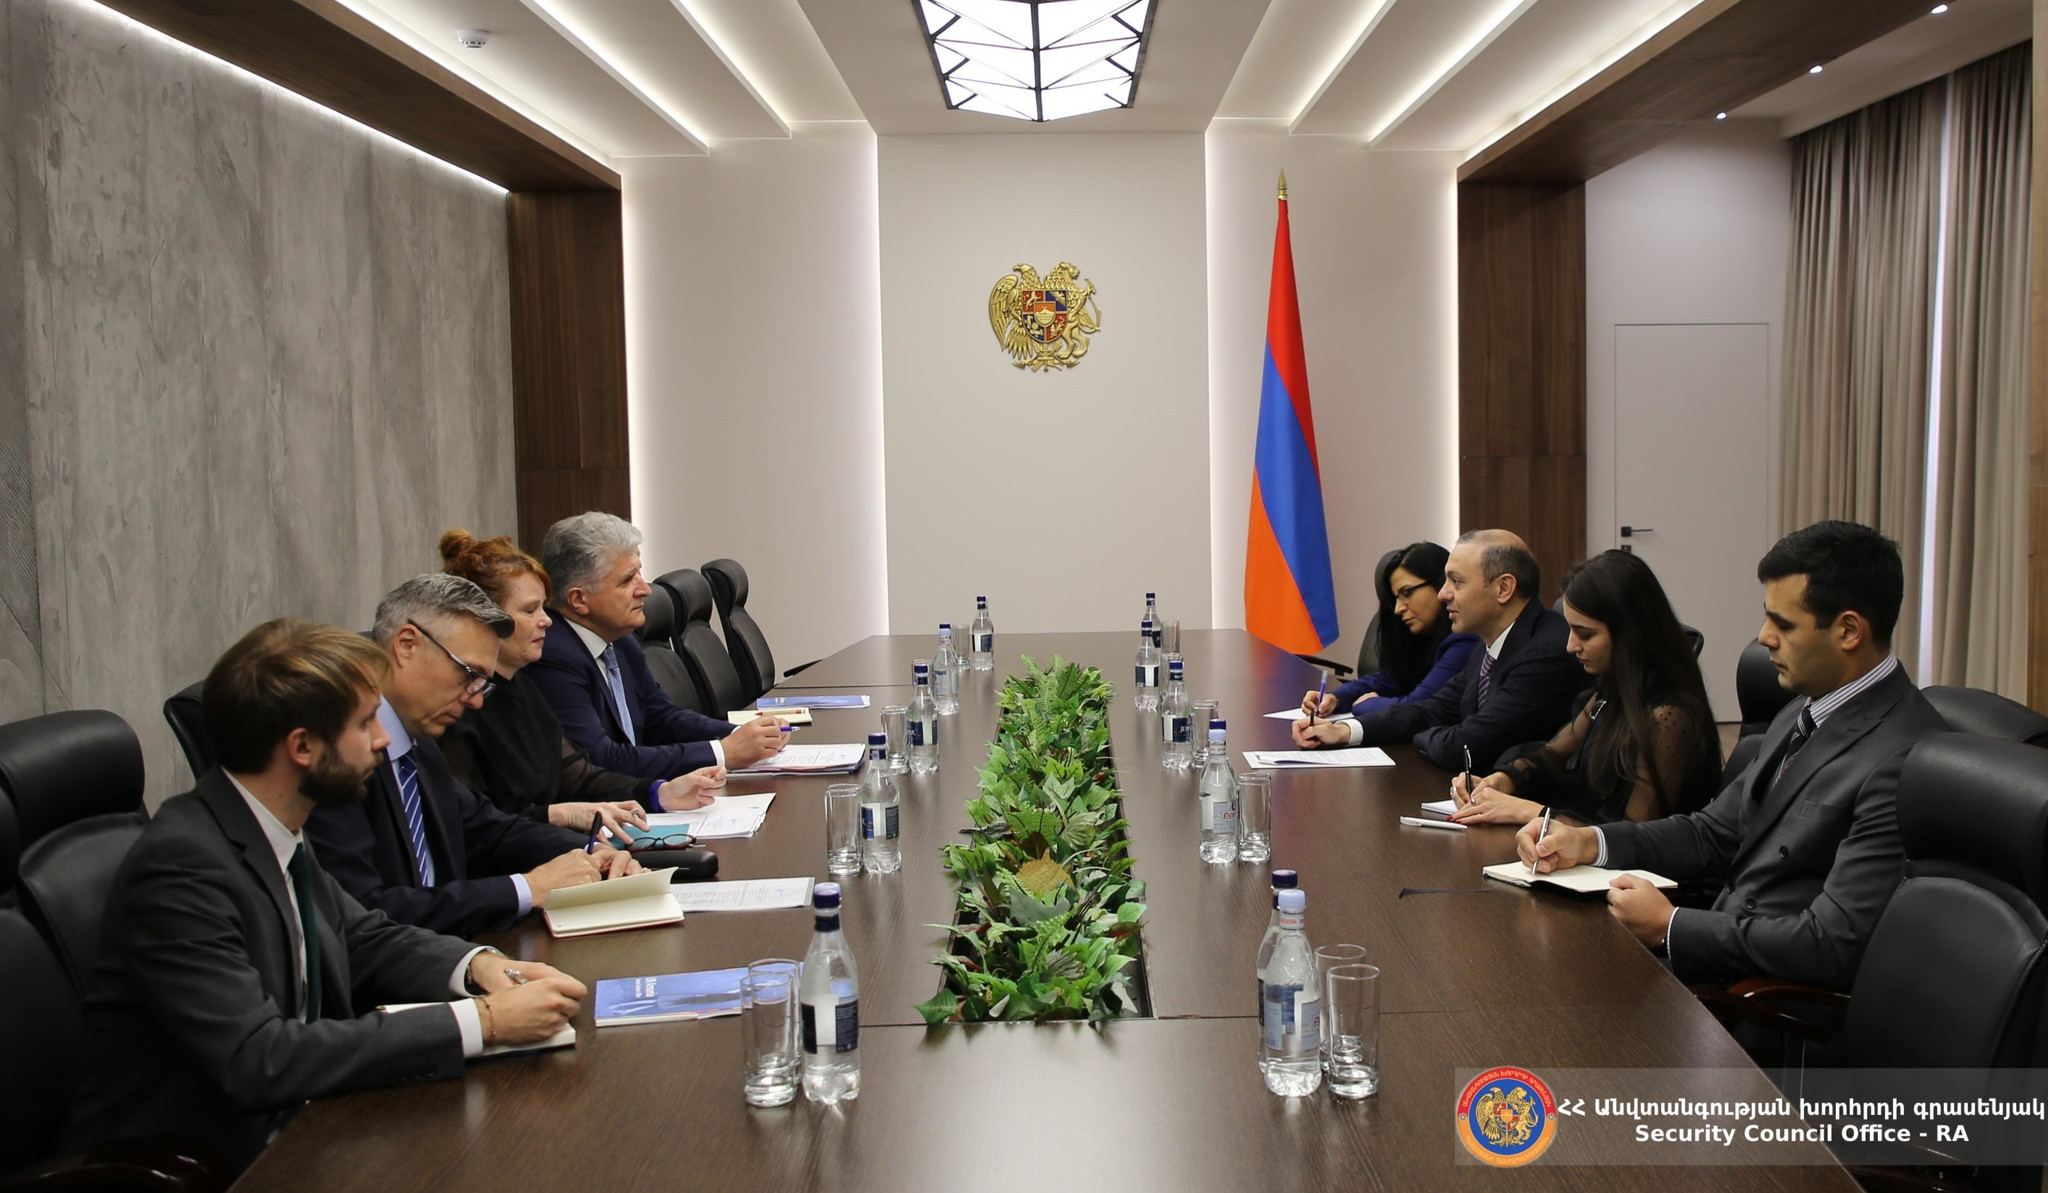 Григорян и замгенсек ООН обсудили армяно-азербайджанские отношения